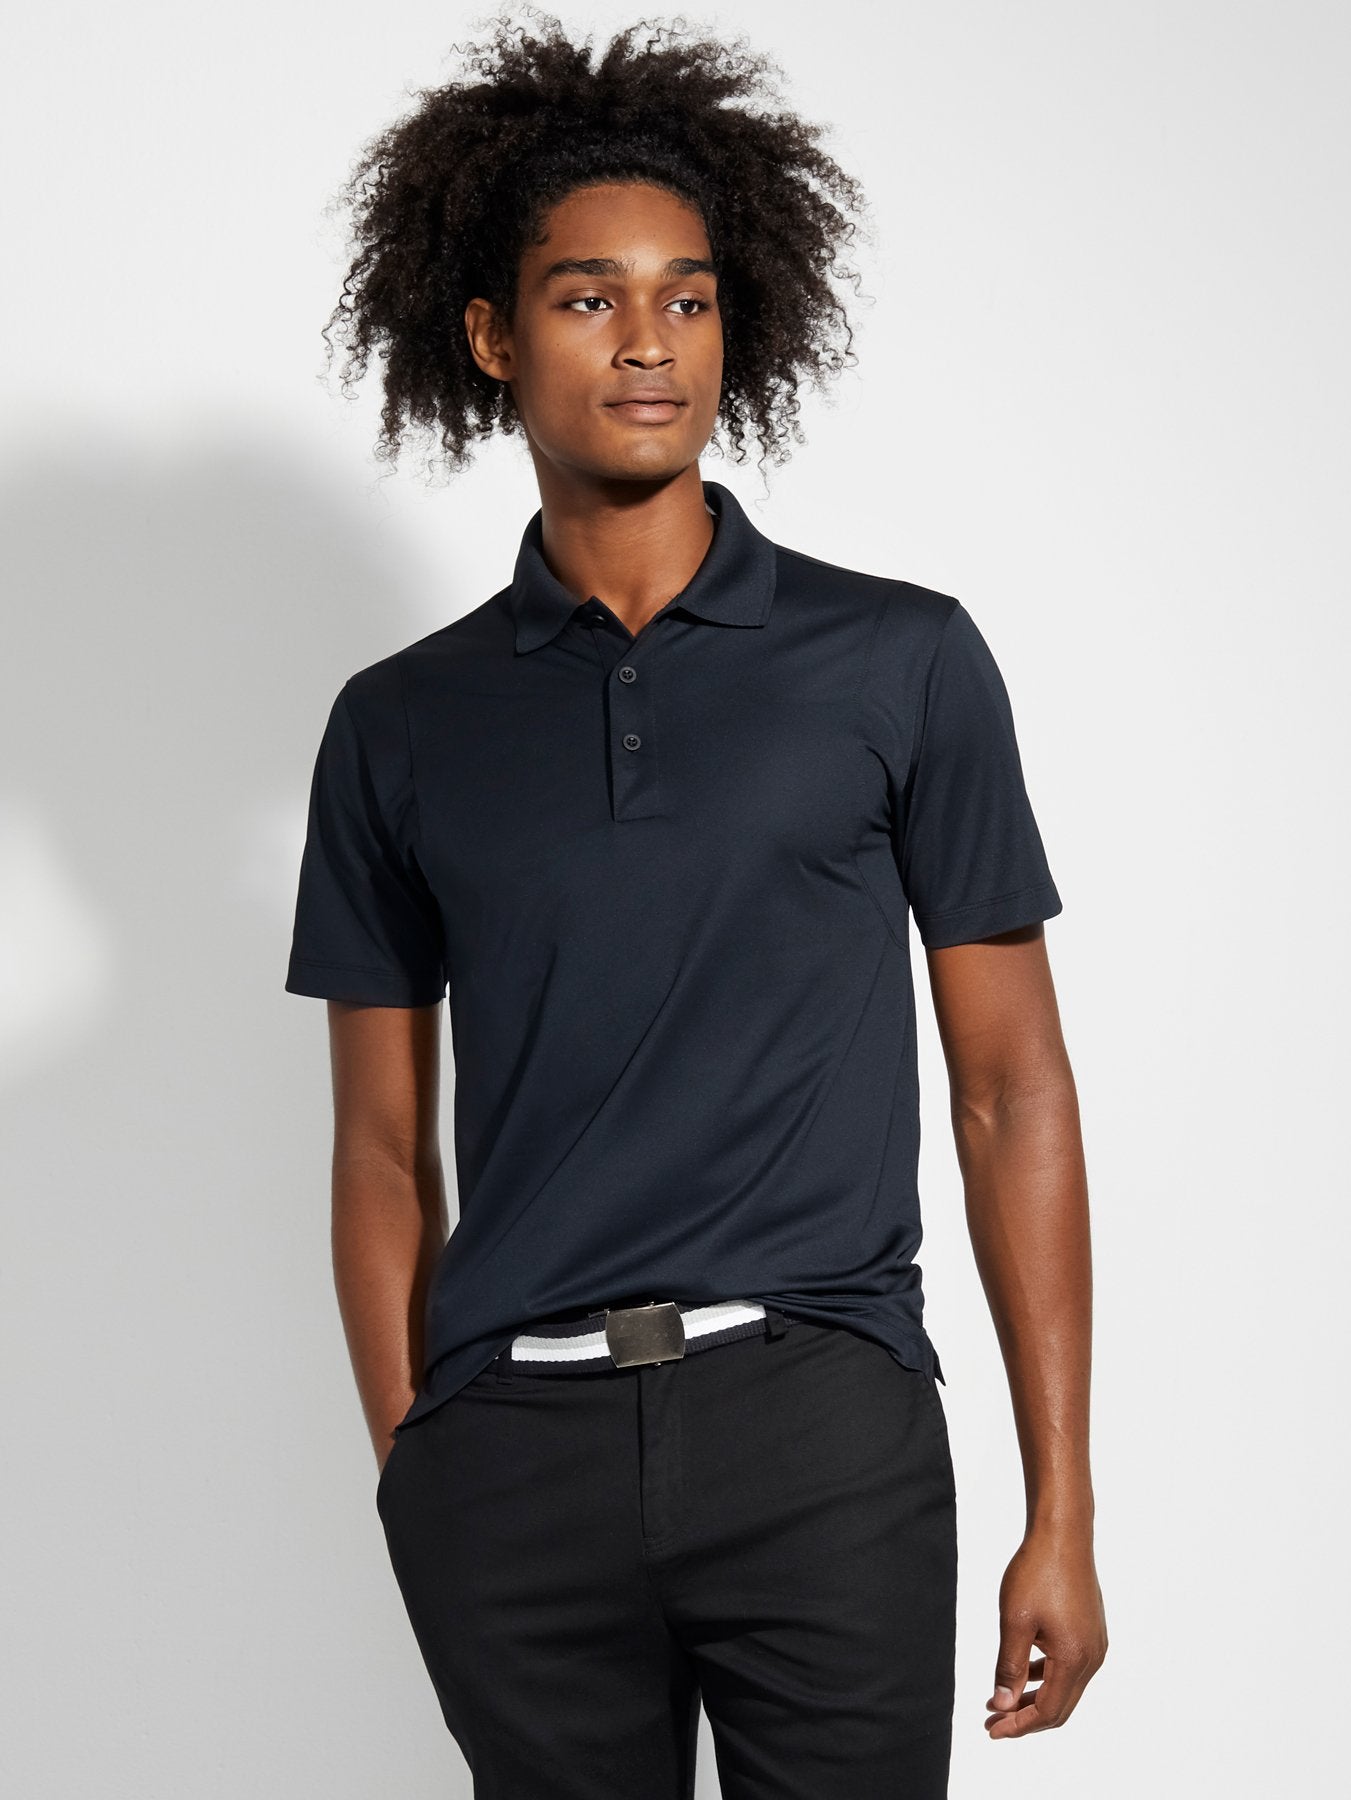 Men's Dri-Fit Performance Polo - Black – ICO Uniforms